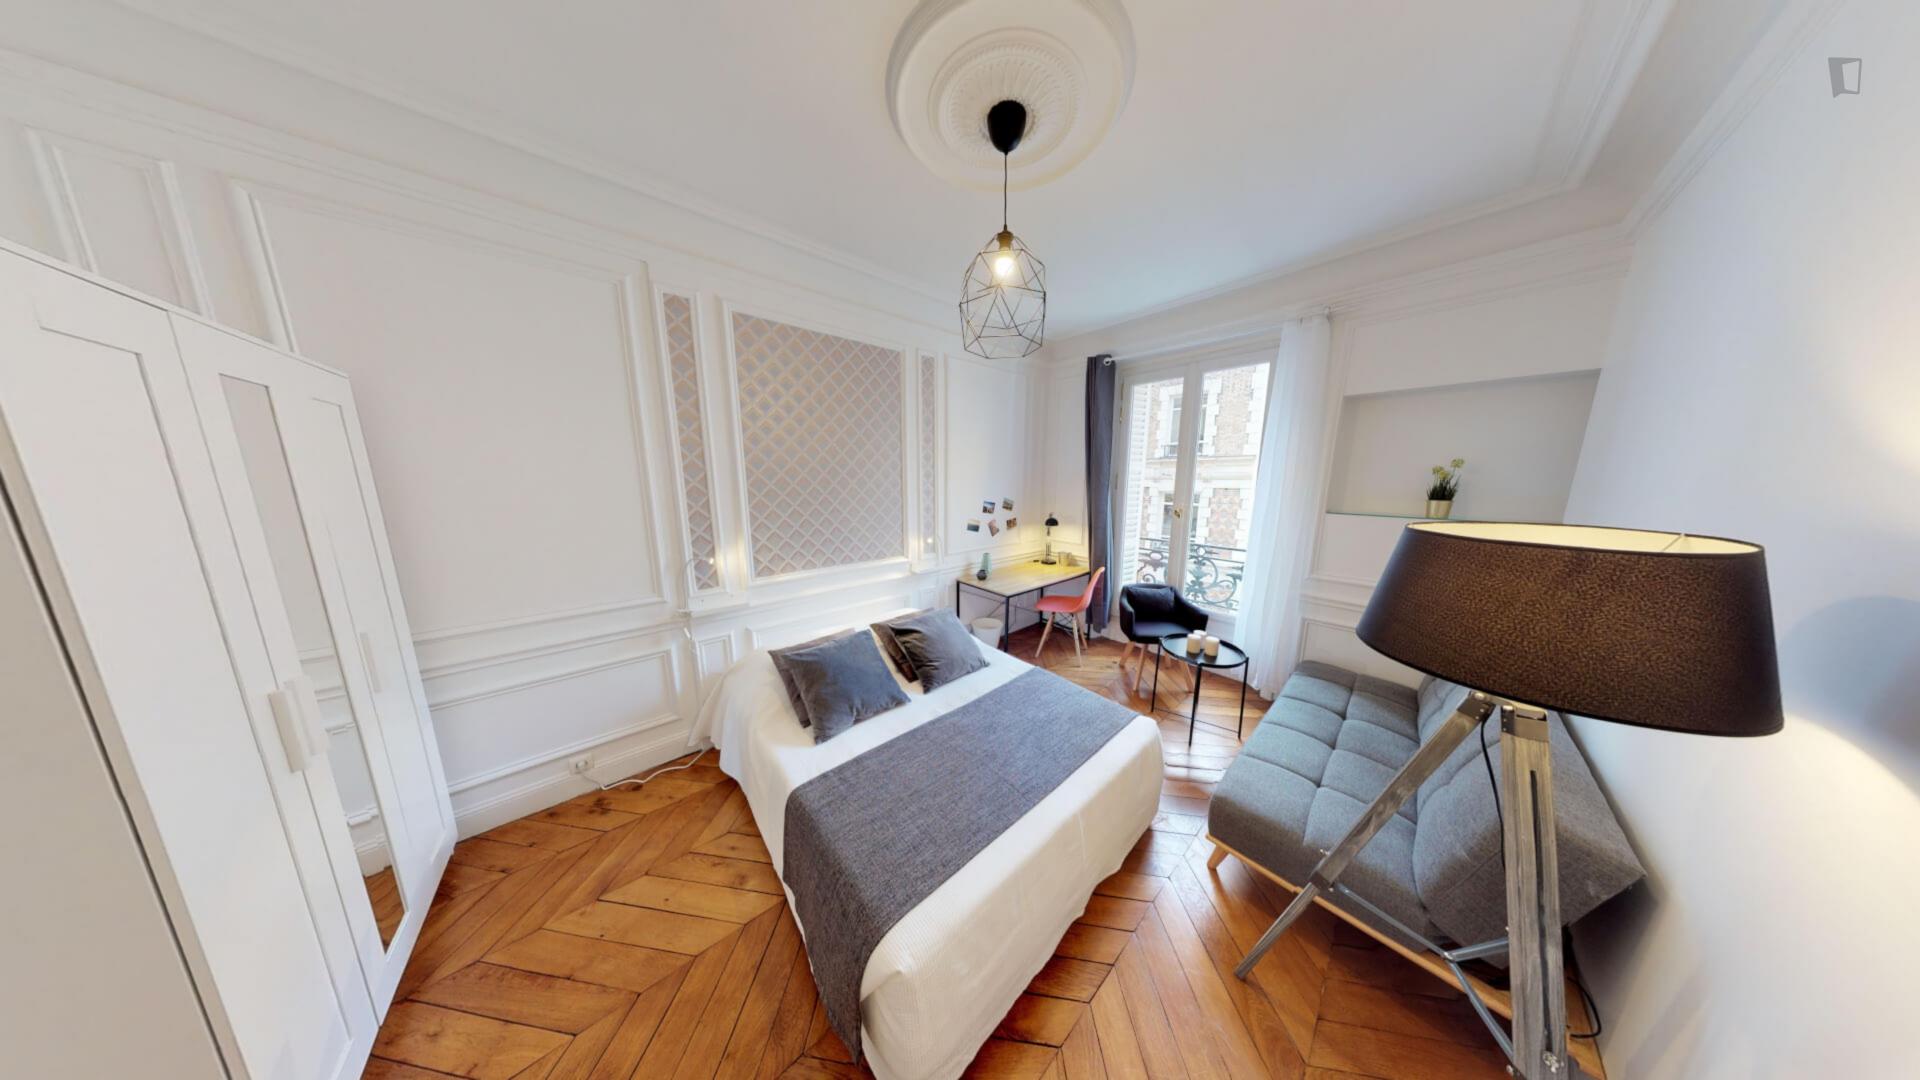 Poisson - Sublime double bedroom in Paris